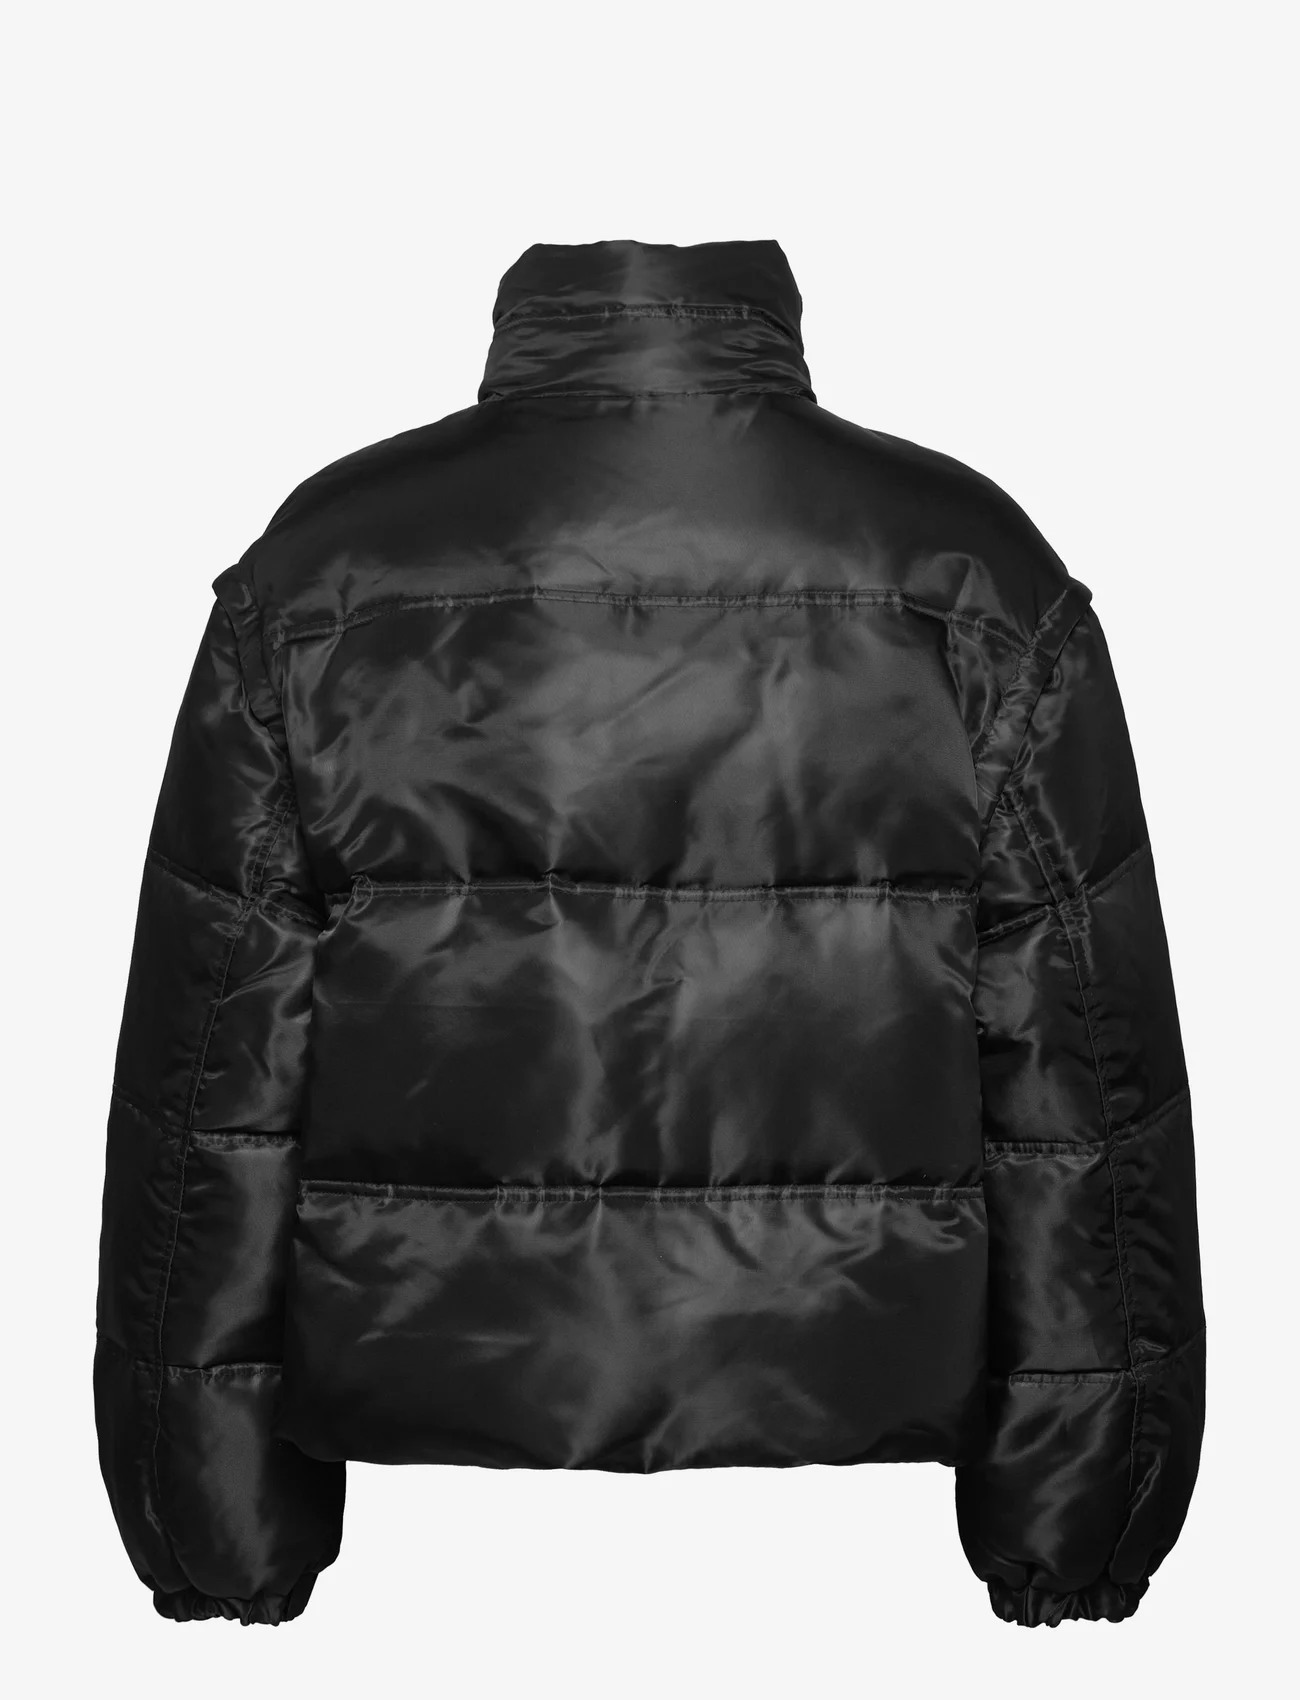 NORR - Bondi 2-in-1 down jacket - winter jacket - black - 1